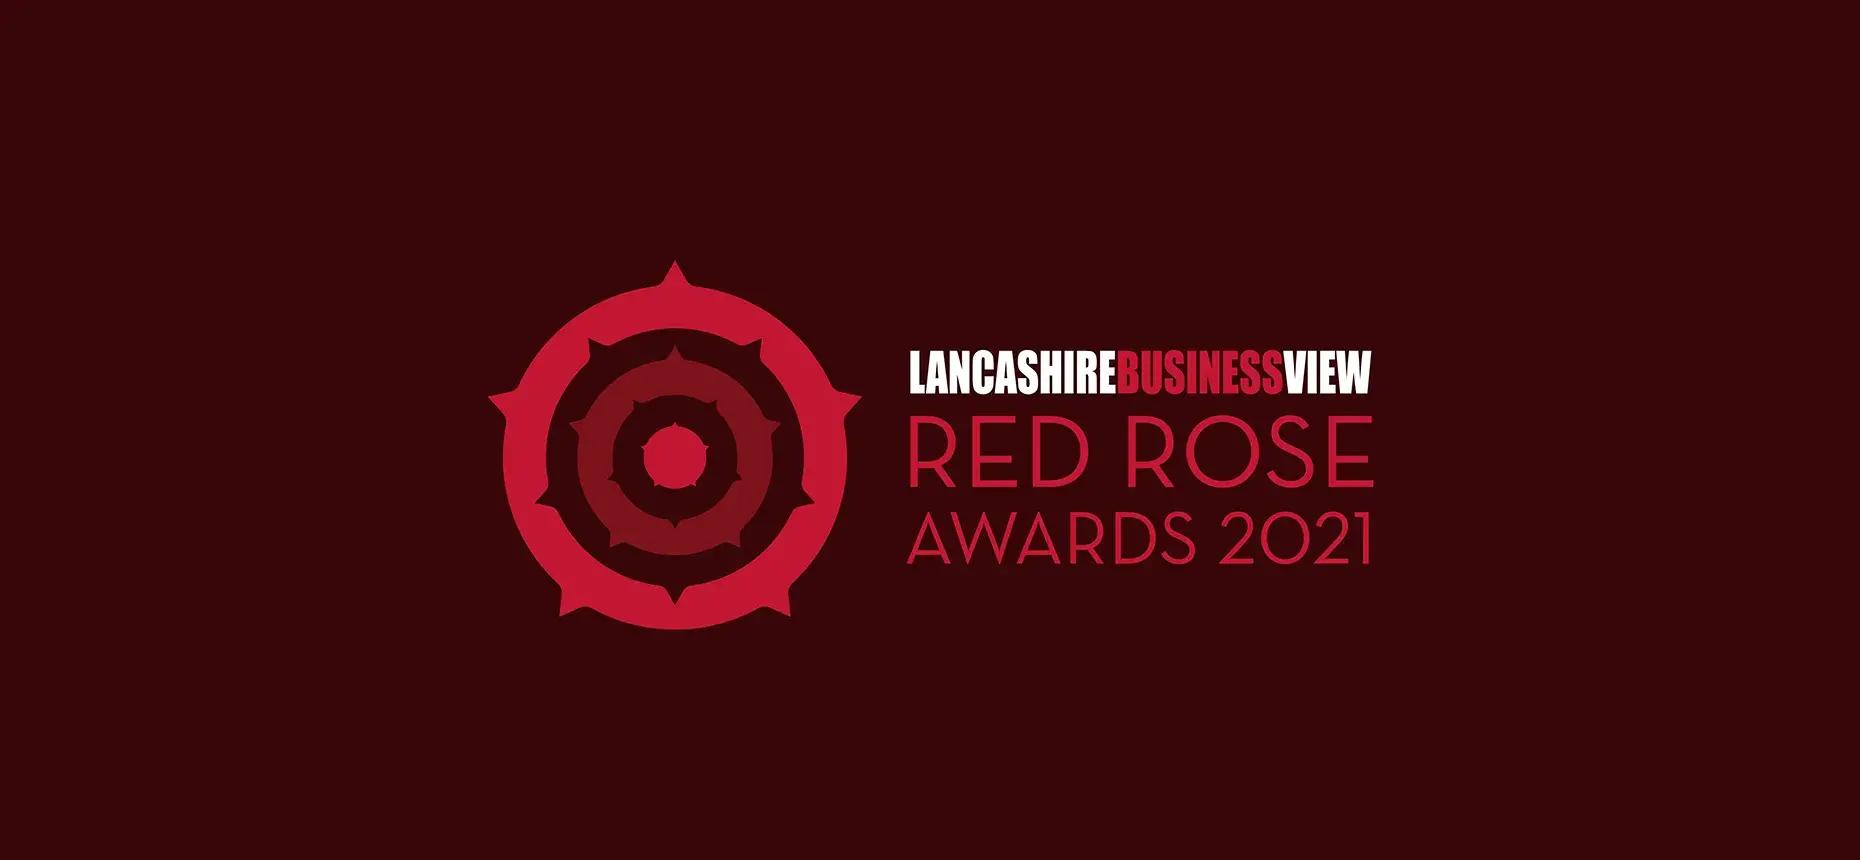 Red rose awards